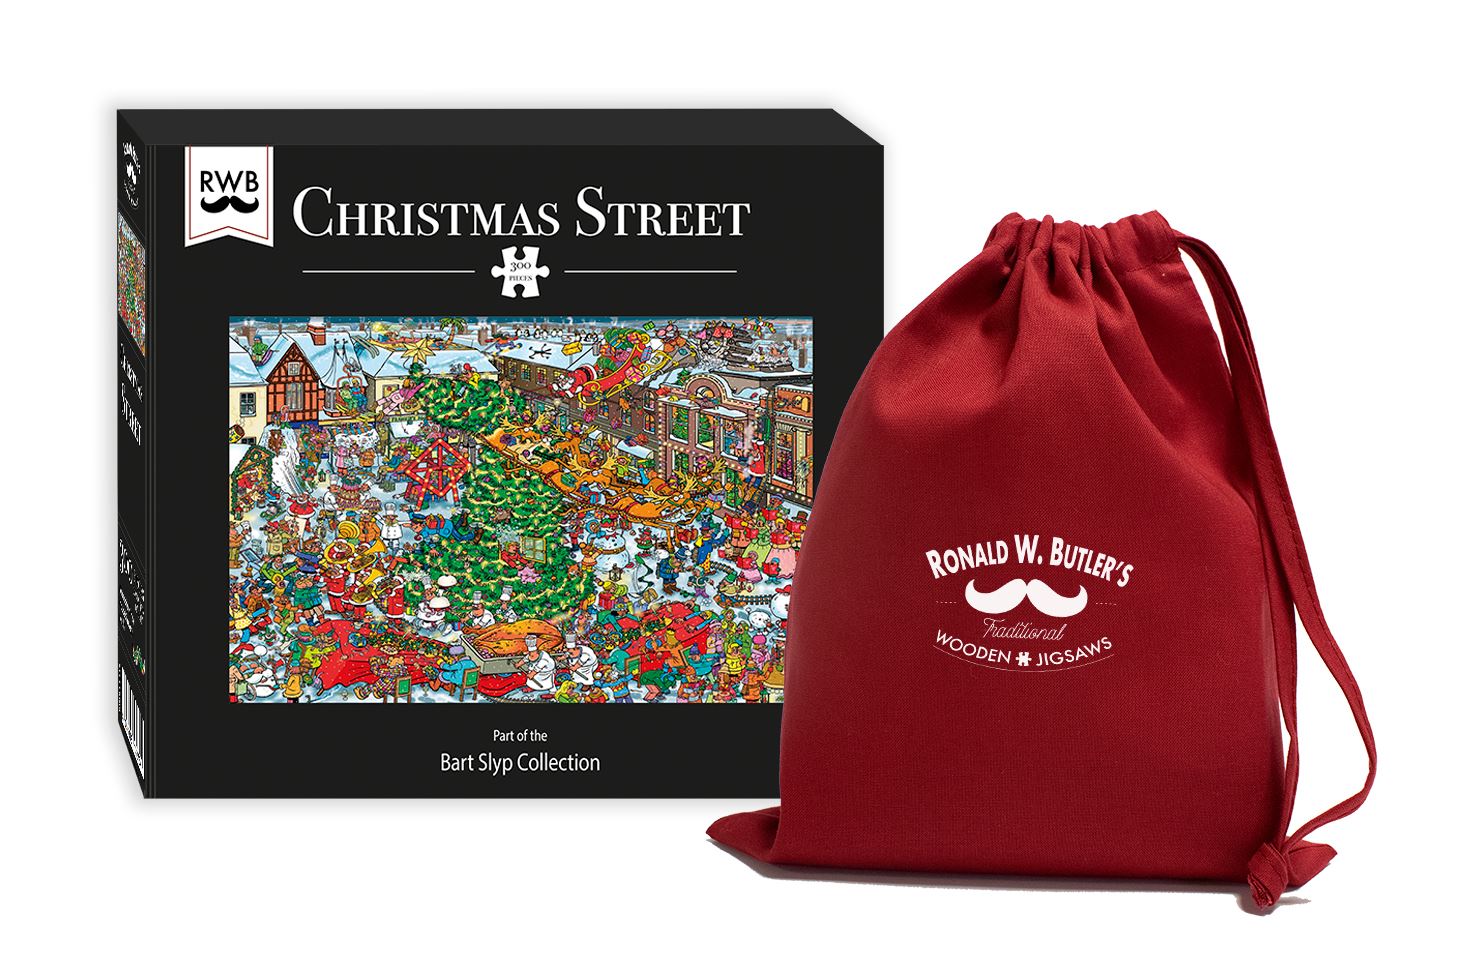 Bart Slyp Christmas Street 300 Piece Wooden Jigsaw Puzzle box